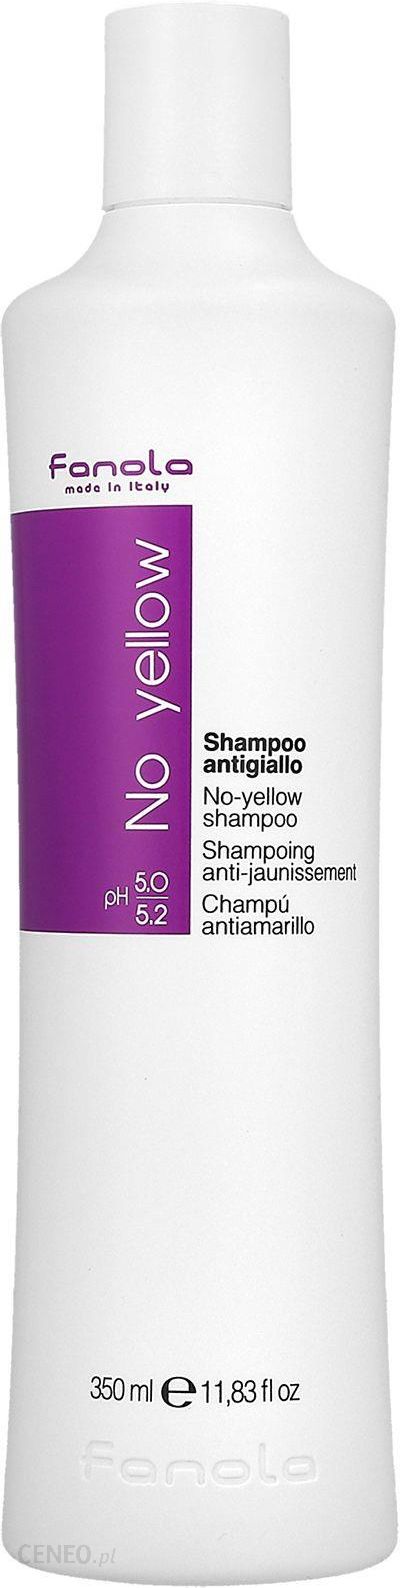 szampon fanola no yellow 350ml